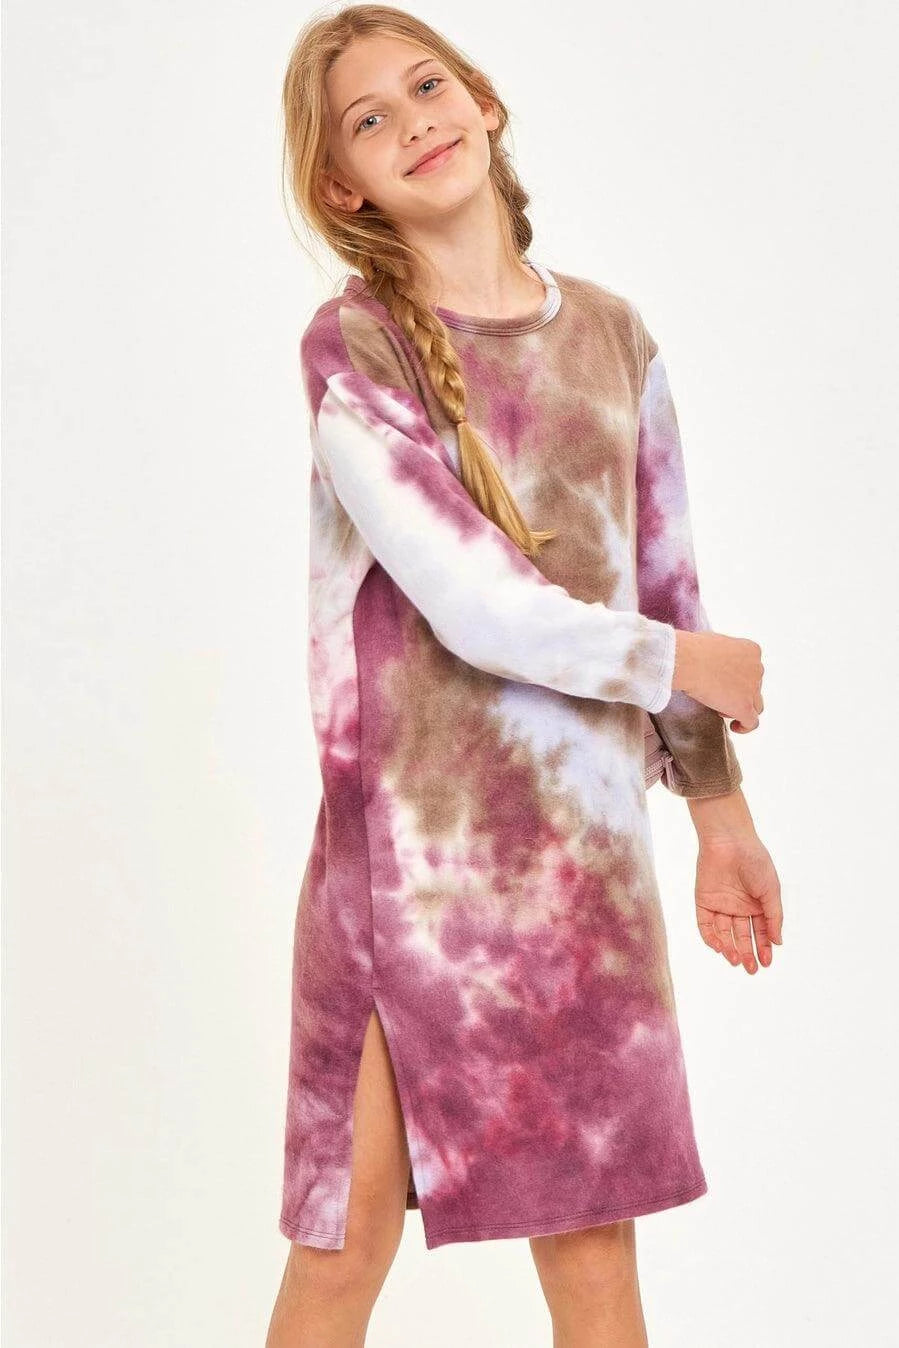 Girls Tye Dye Dress - Sprig Flower Co